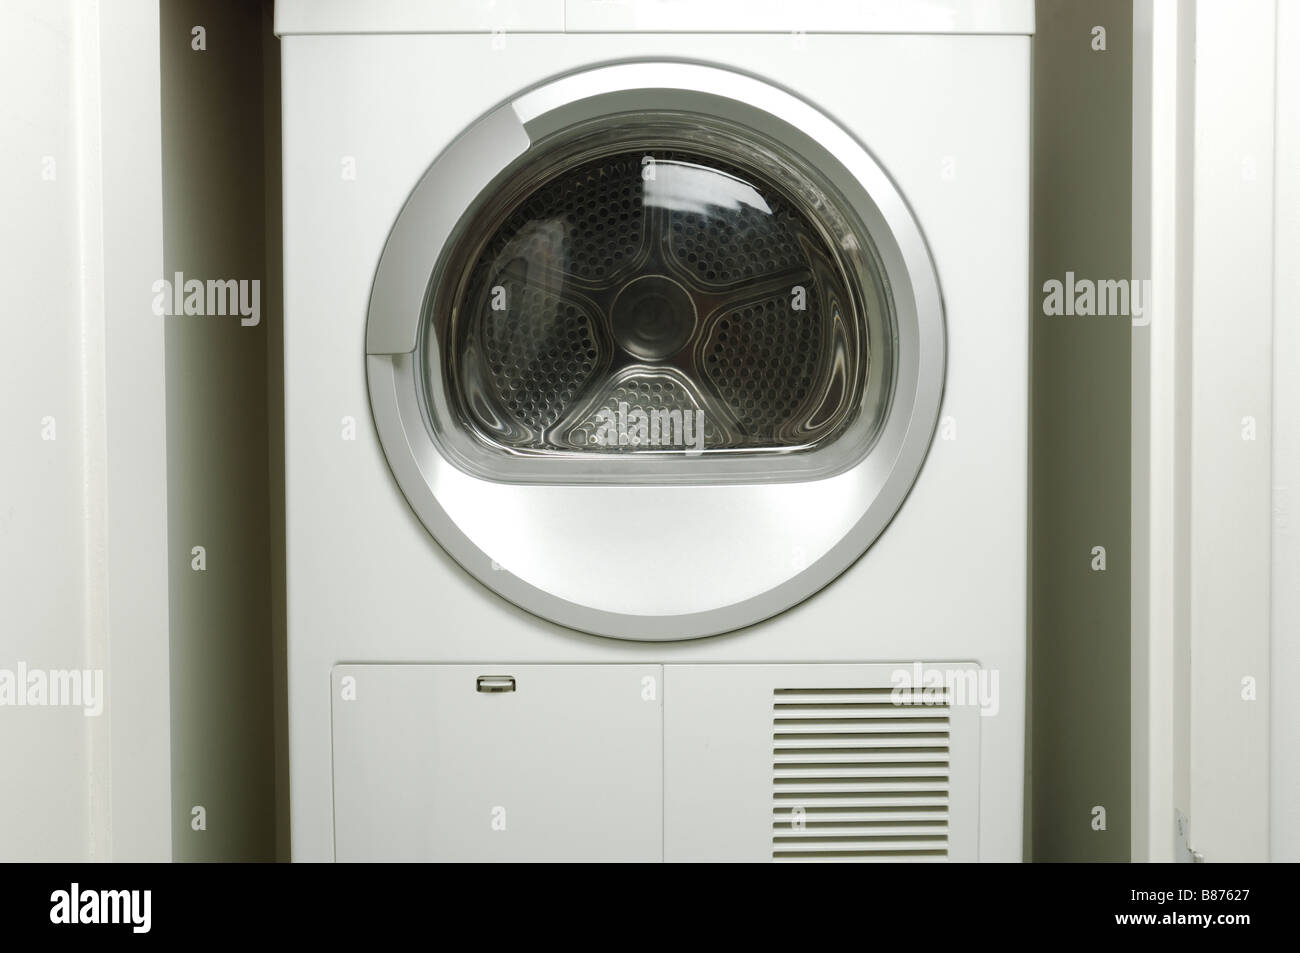 An empty laundry washing machine drying machine Stock Photo